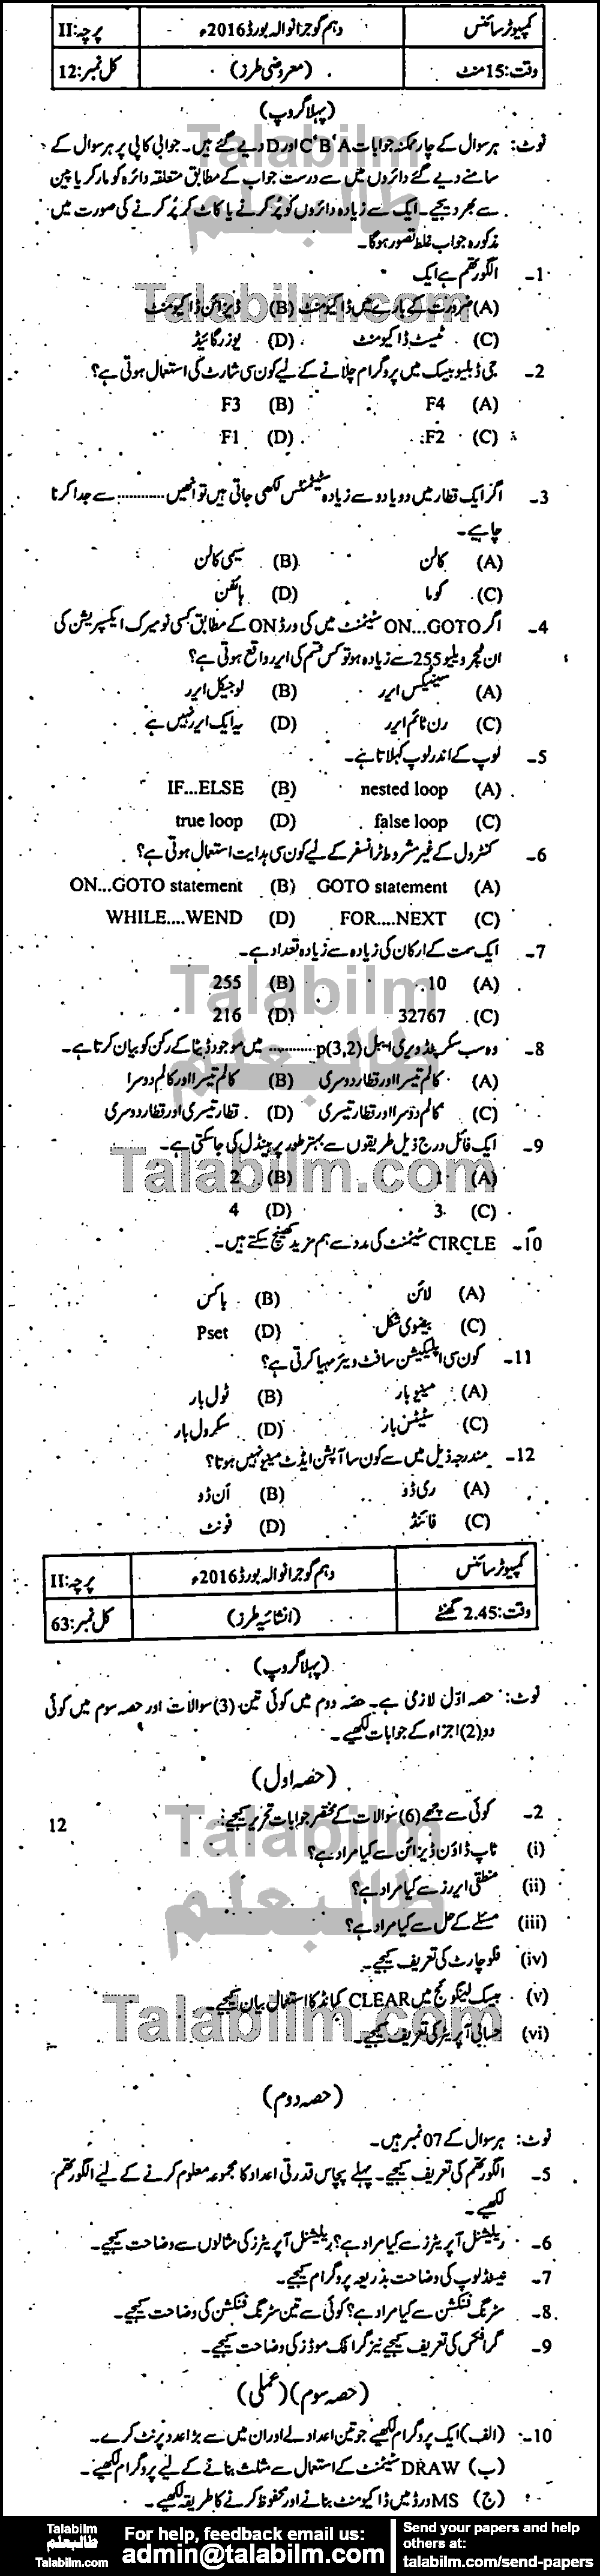 Computer Science 0 past paper for Urdu Medium 2016 Group-I